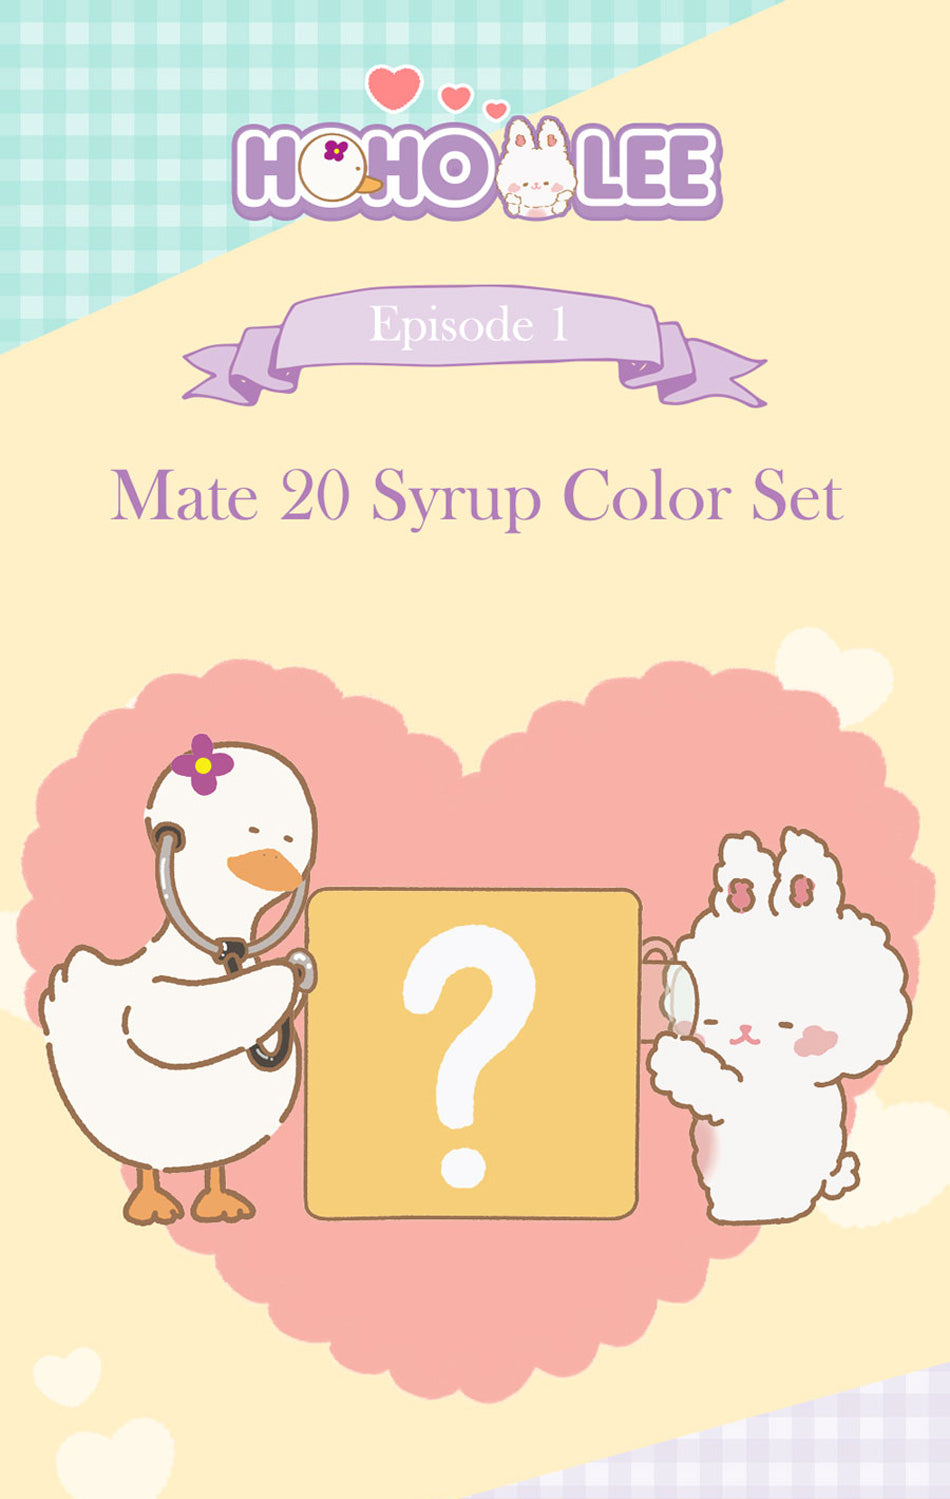 HoHoLee Episode 1 Mate 20 Syrup Color Set